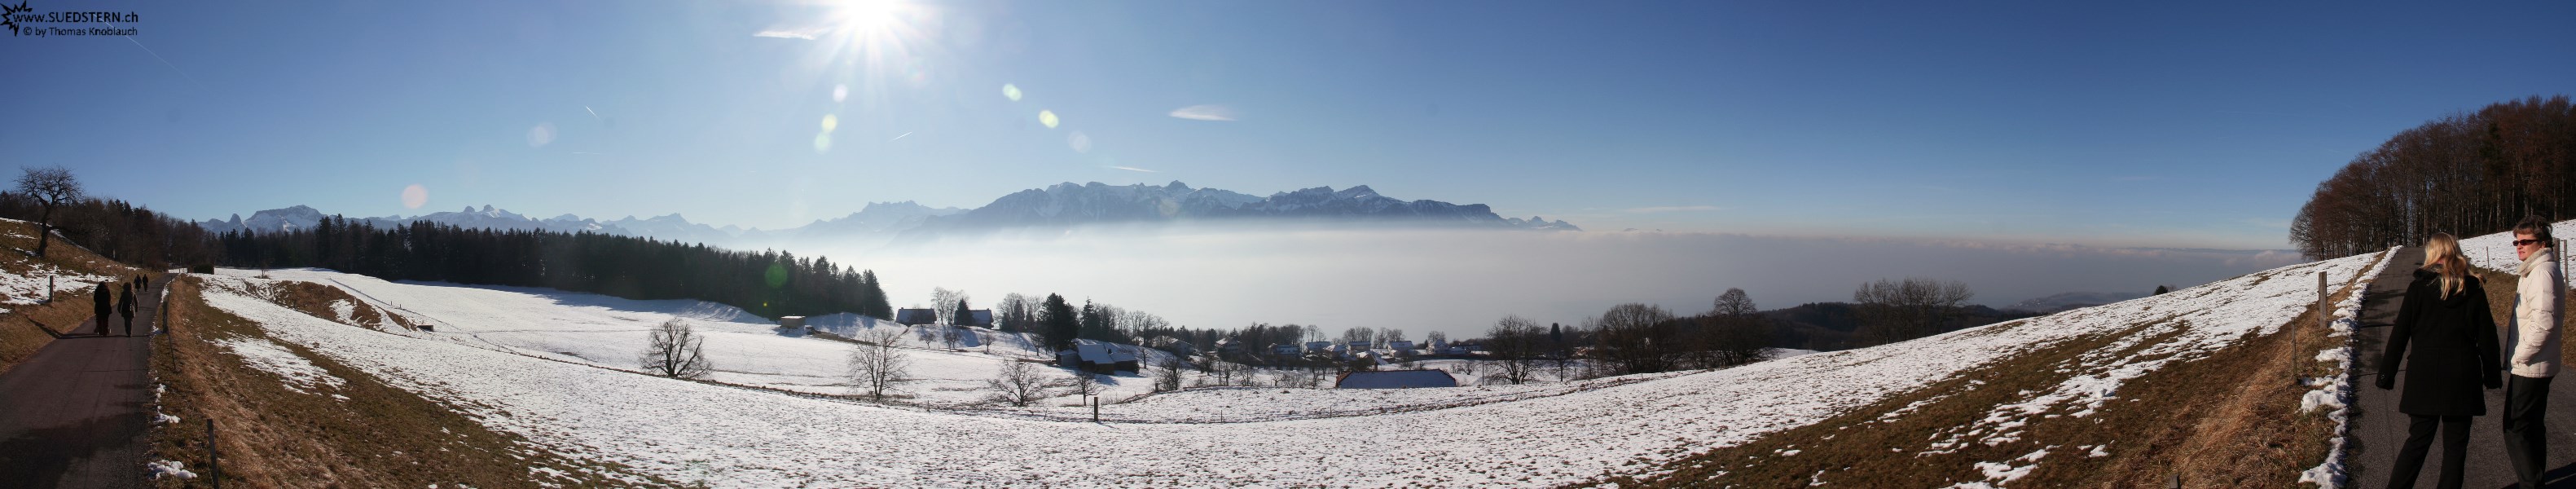 2007-12-27 - Panorama near Mont-Pèlerin, Switzerland